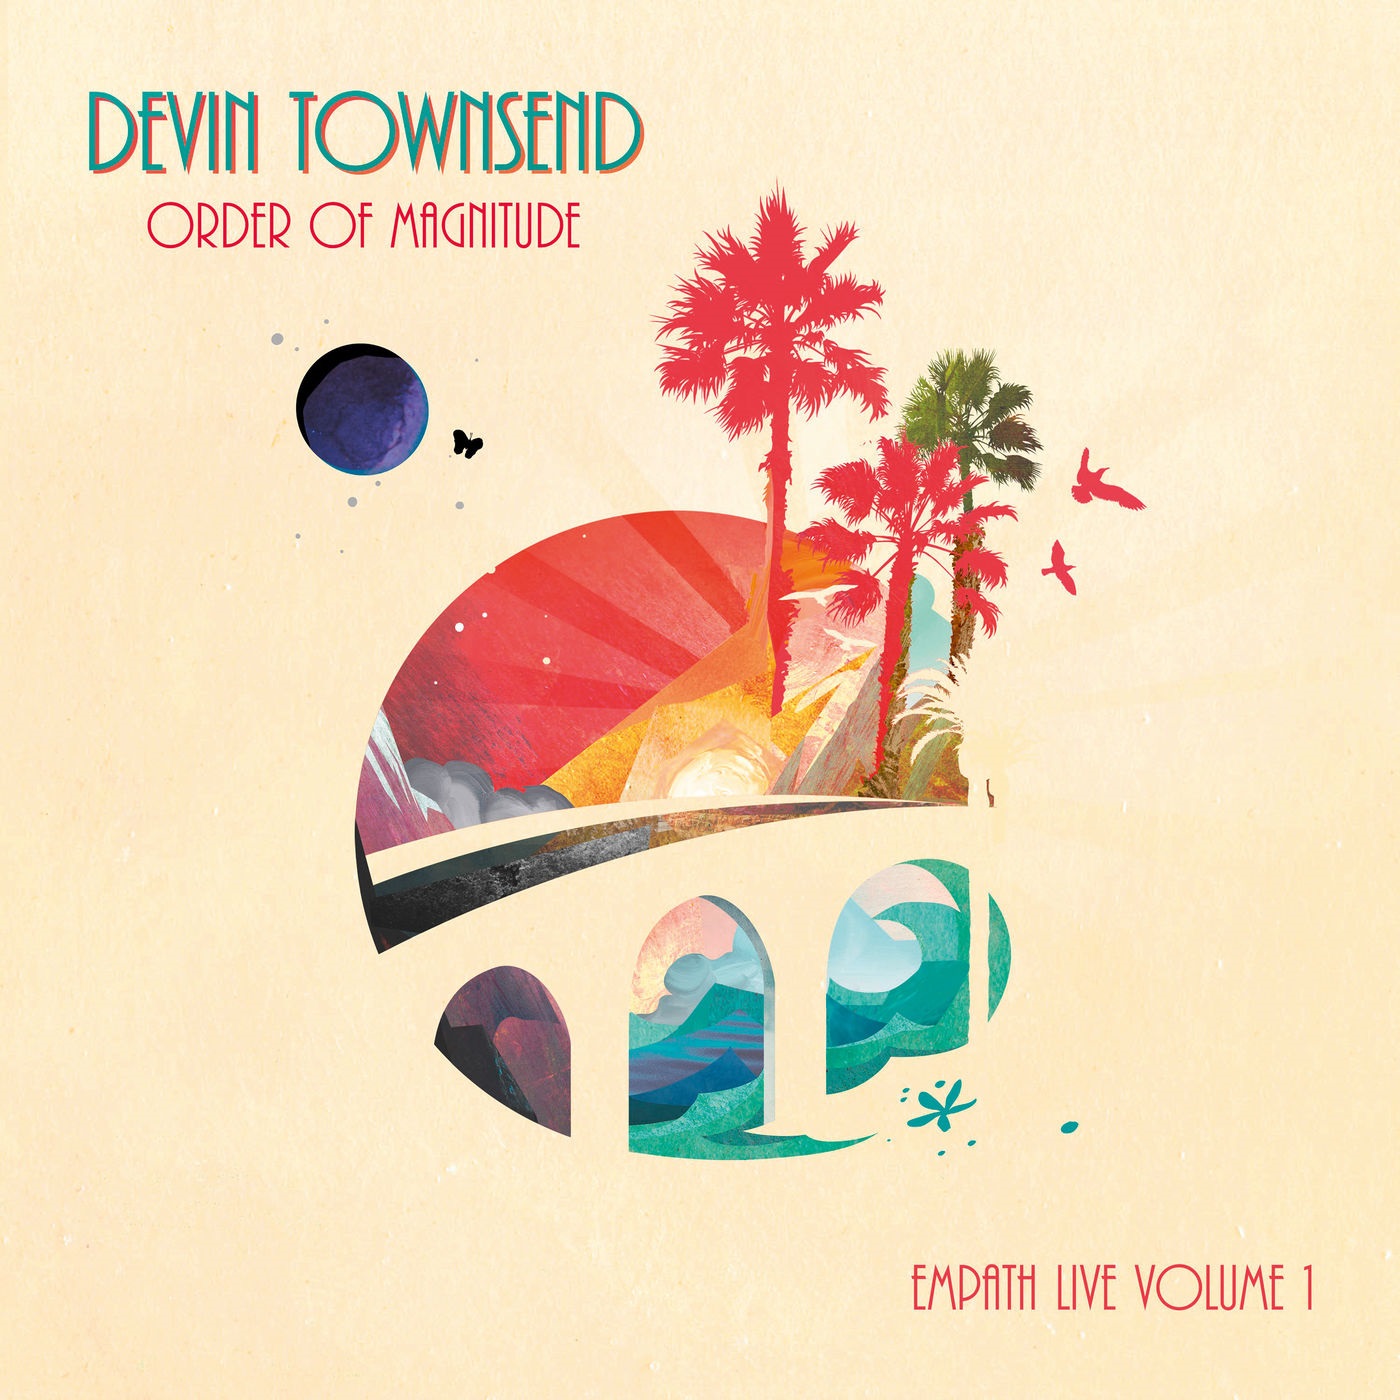 Devin Townsend - Order of Magnitude (Empath Live, Volume. 1) (2020) [FLAC 24bit/48kHz]